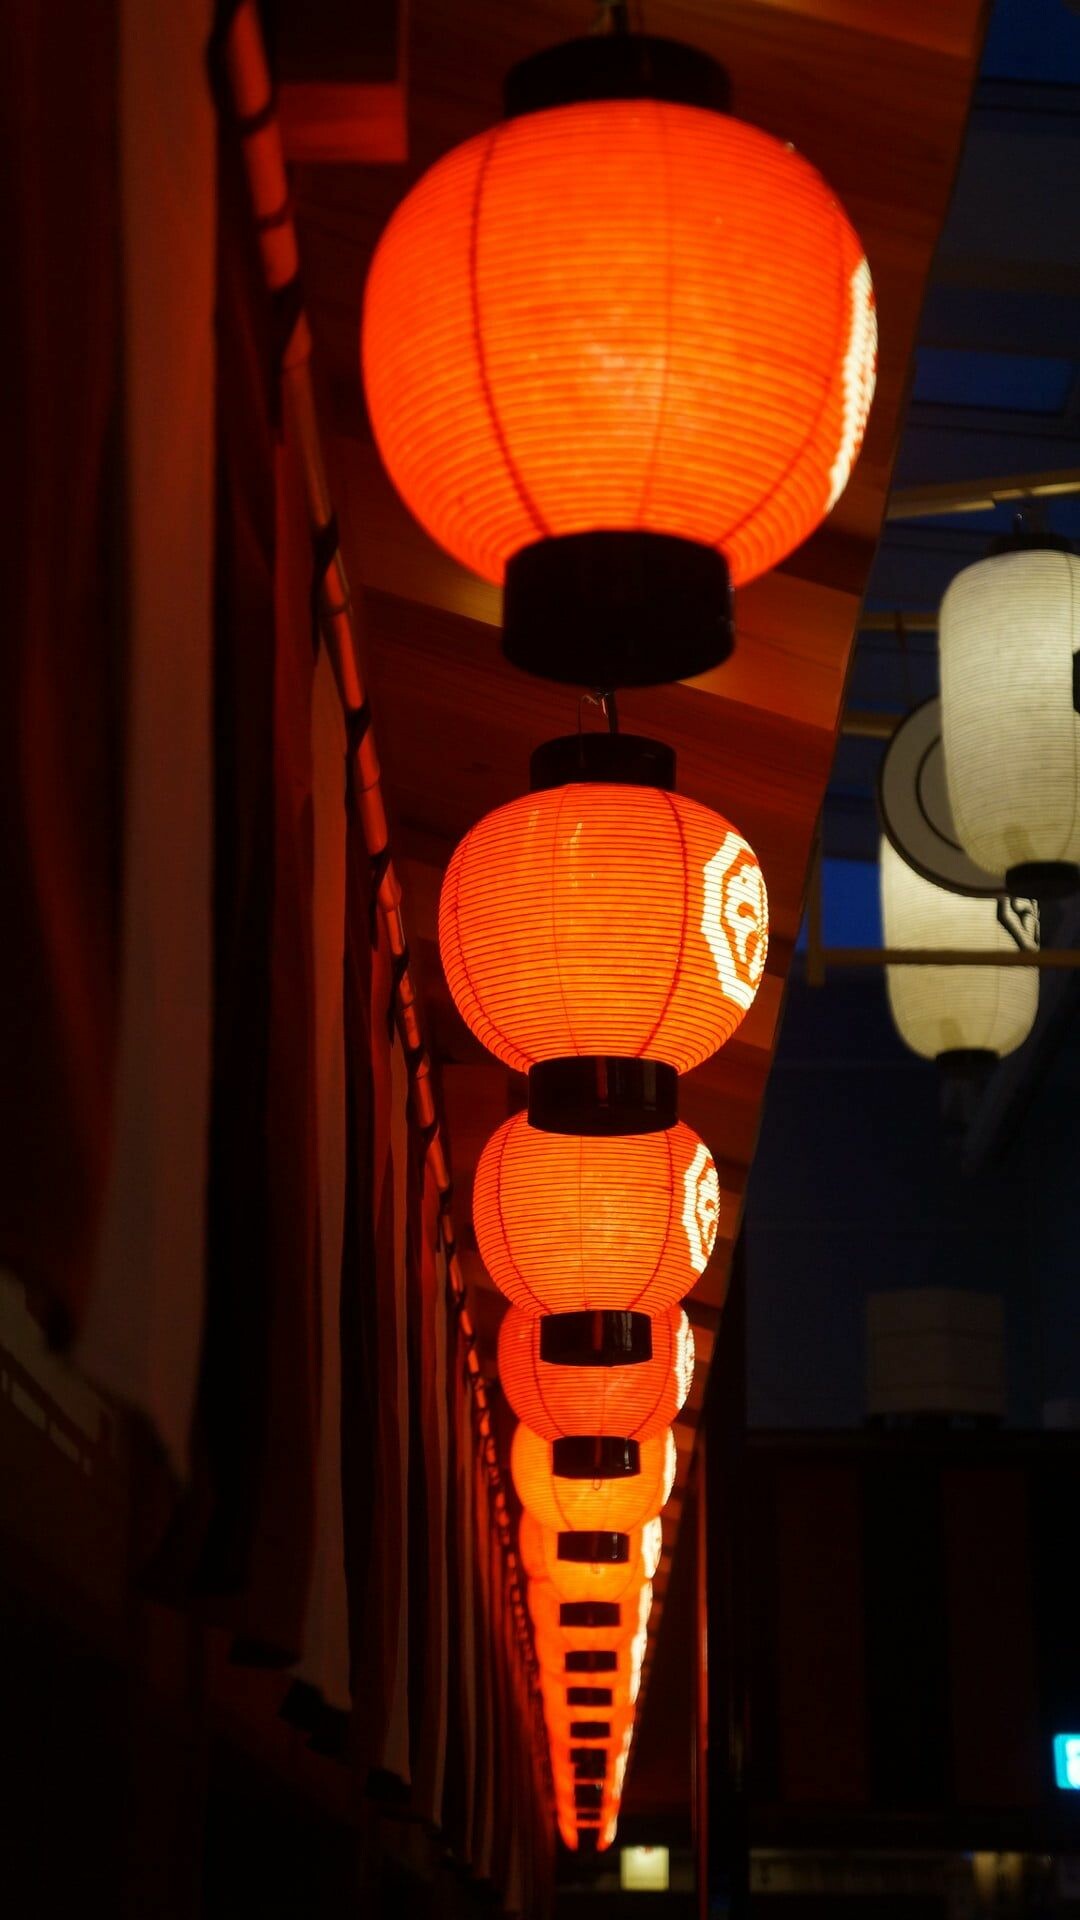 Lanterns: A decorative casing for a light, made of paper, Chochin. 1080x1920 Full HD Wallpaper.